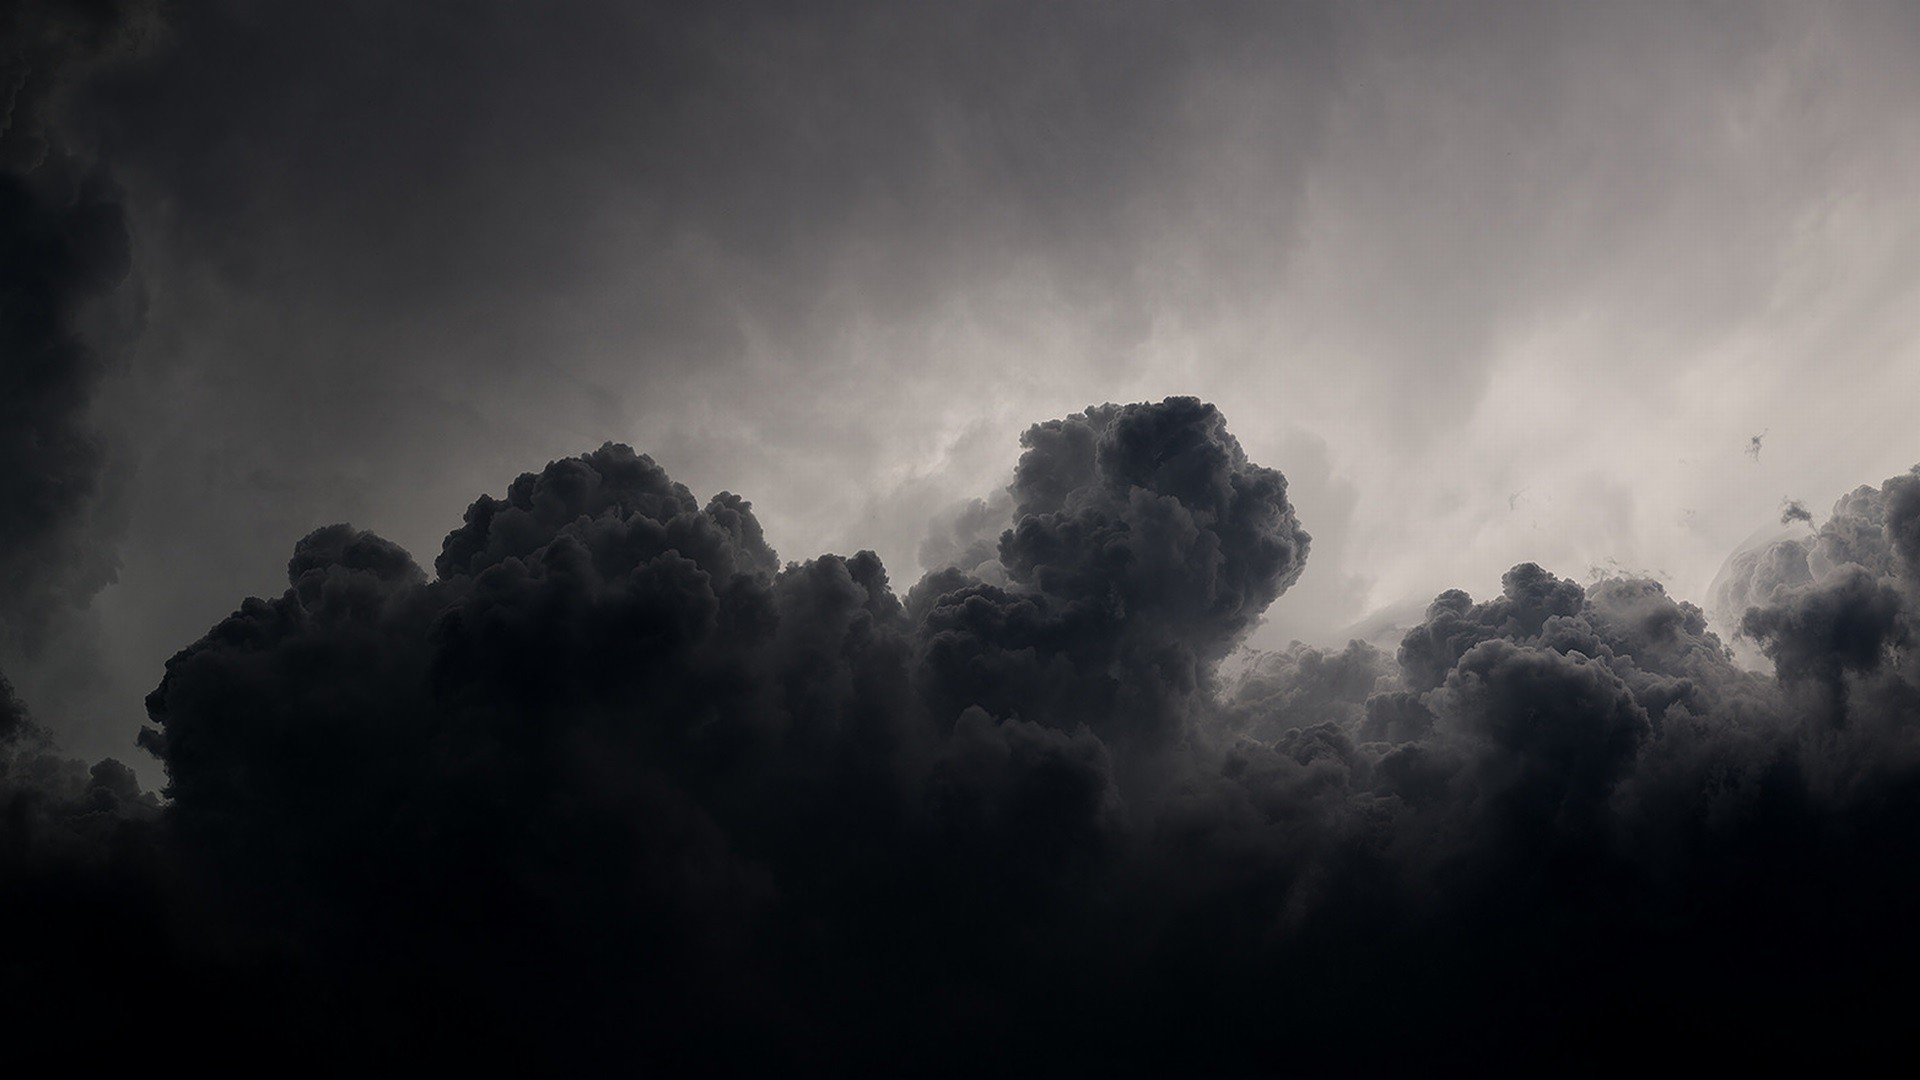 General 1920x1080 clouds monochrome dark nature sky storm